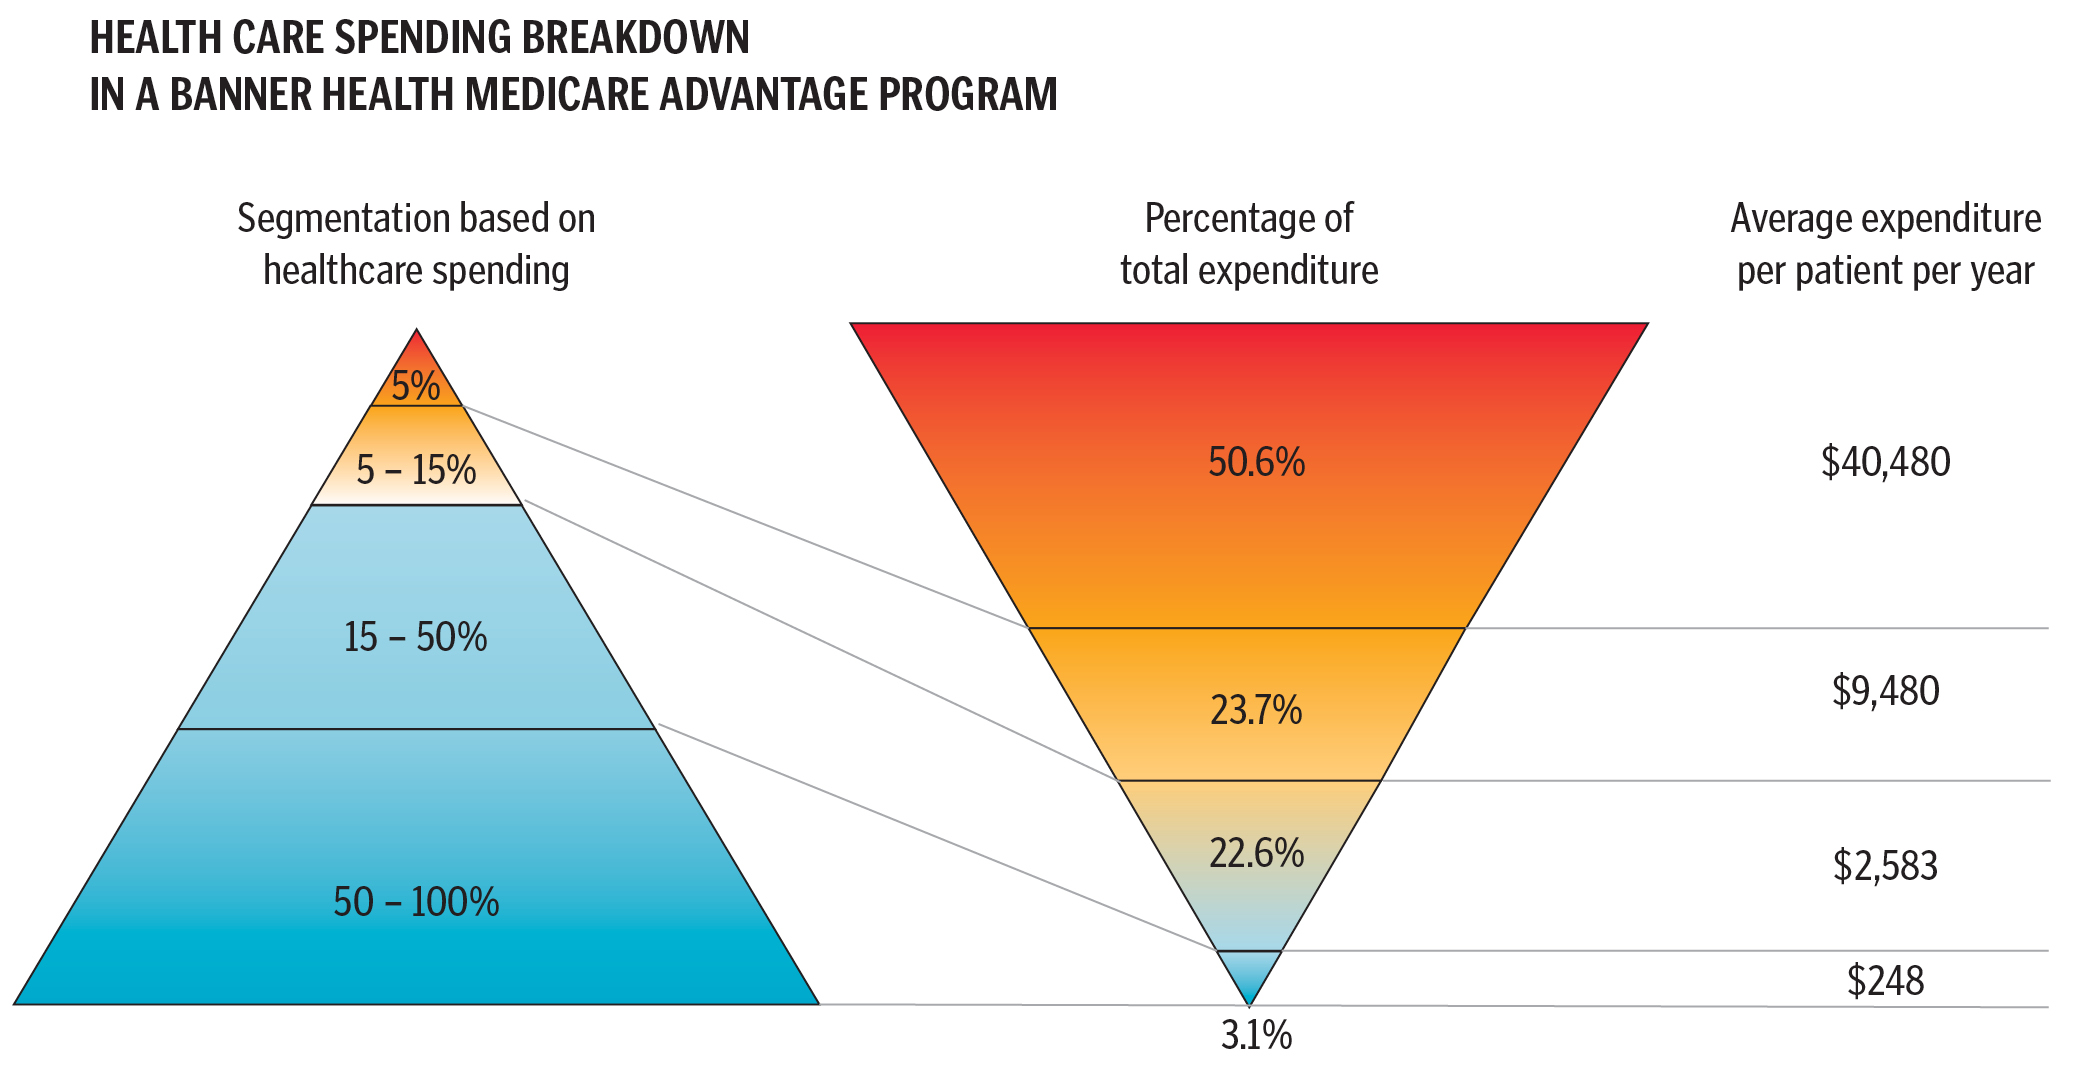 Health Care Spending Breakdown in a Banner Health Medicare Advantage Program